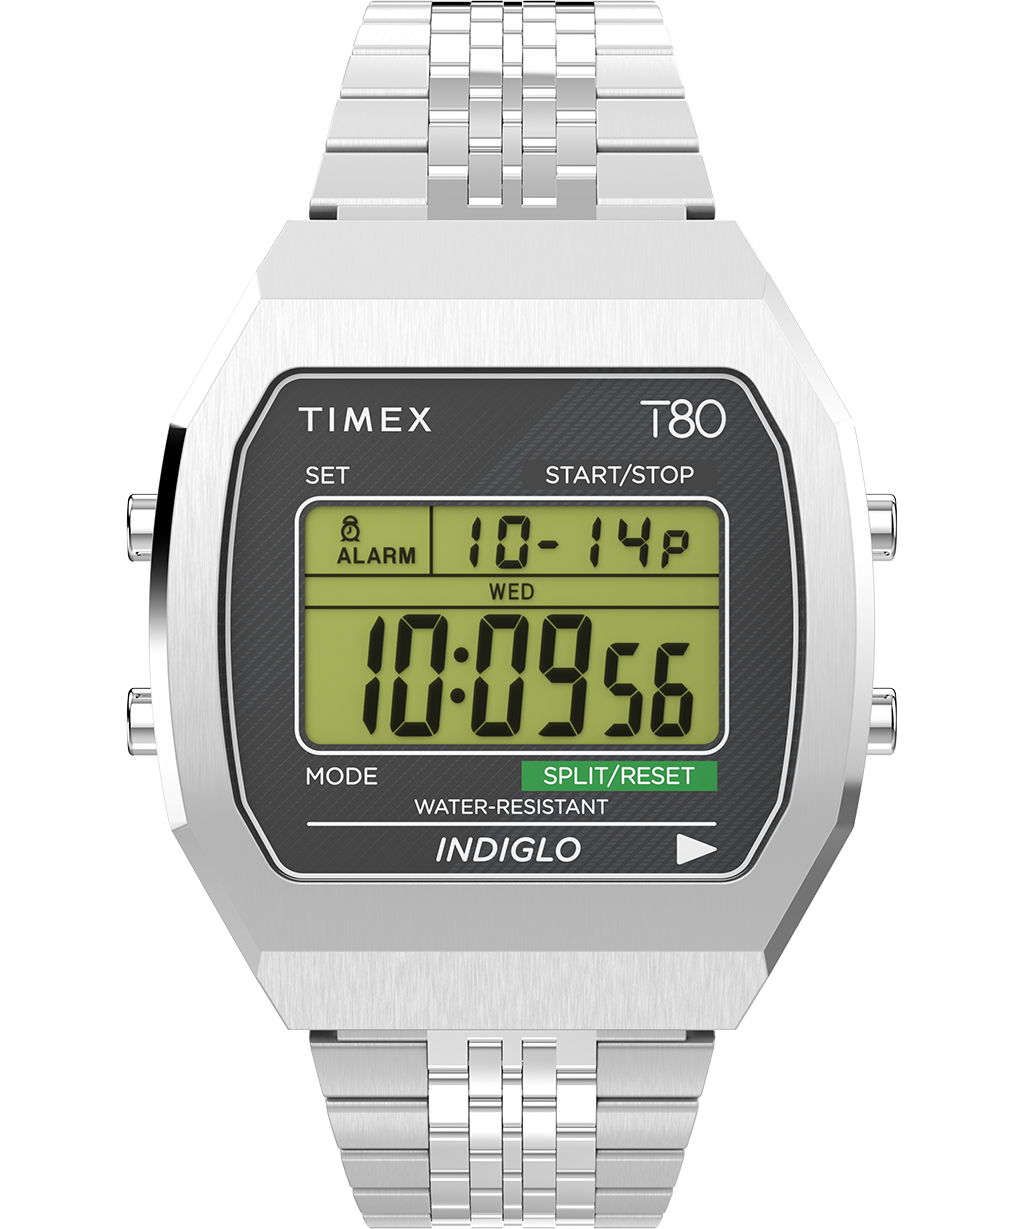 TIMEX T80 lifestyle